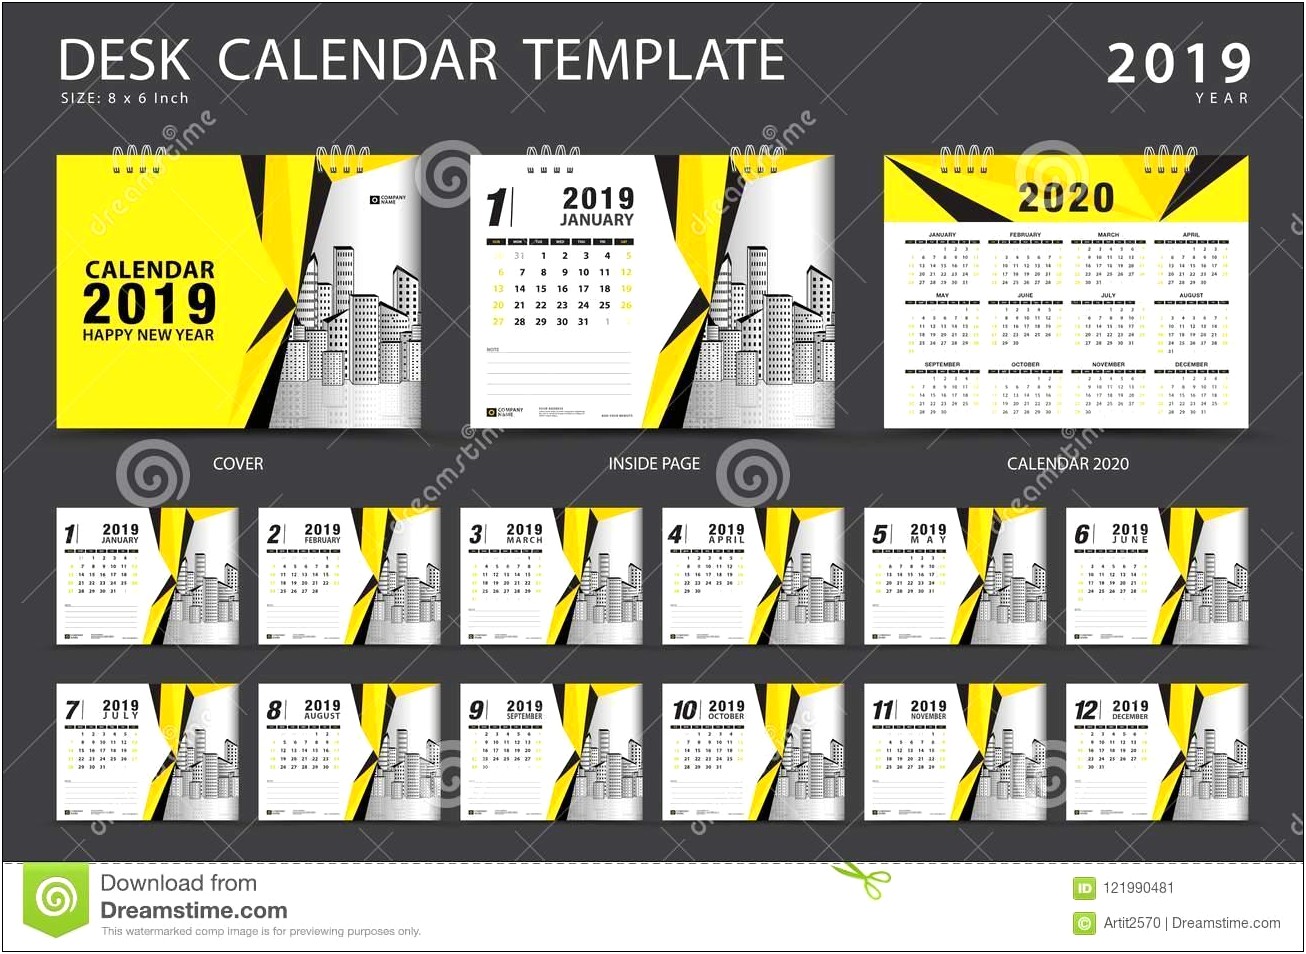 2019 Desk Calendar Template Free Download